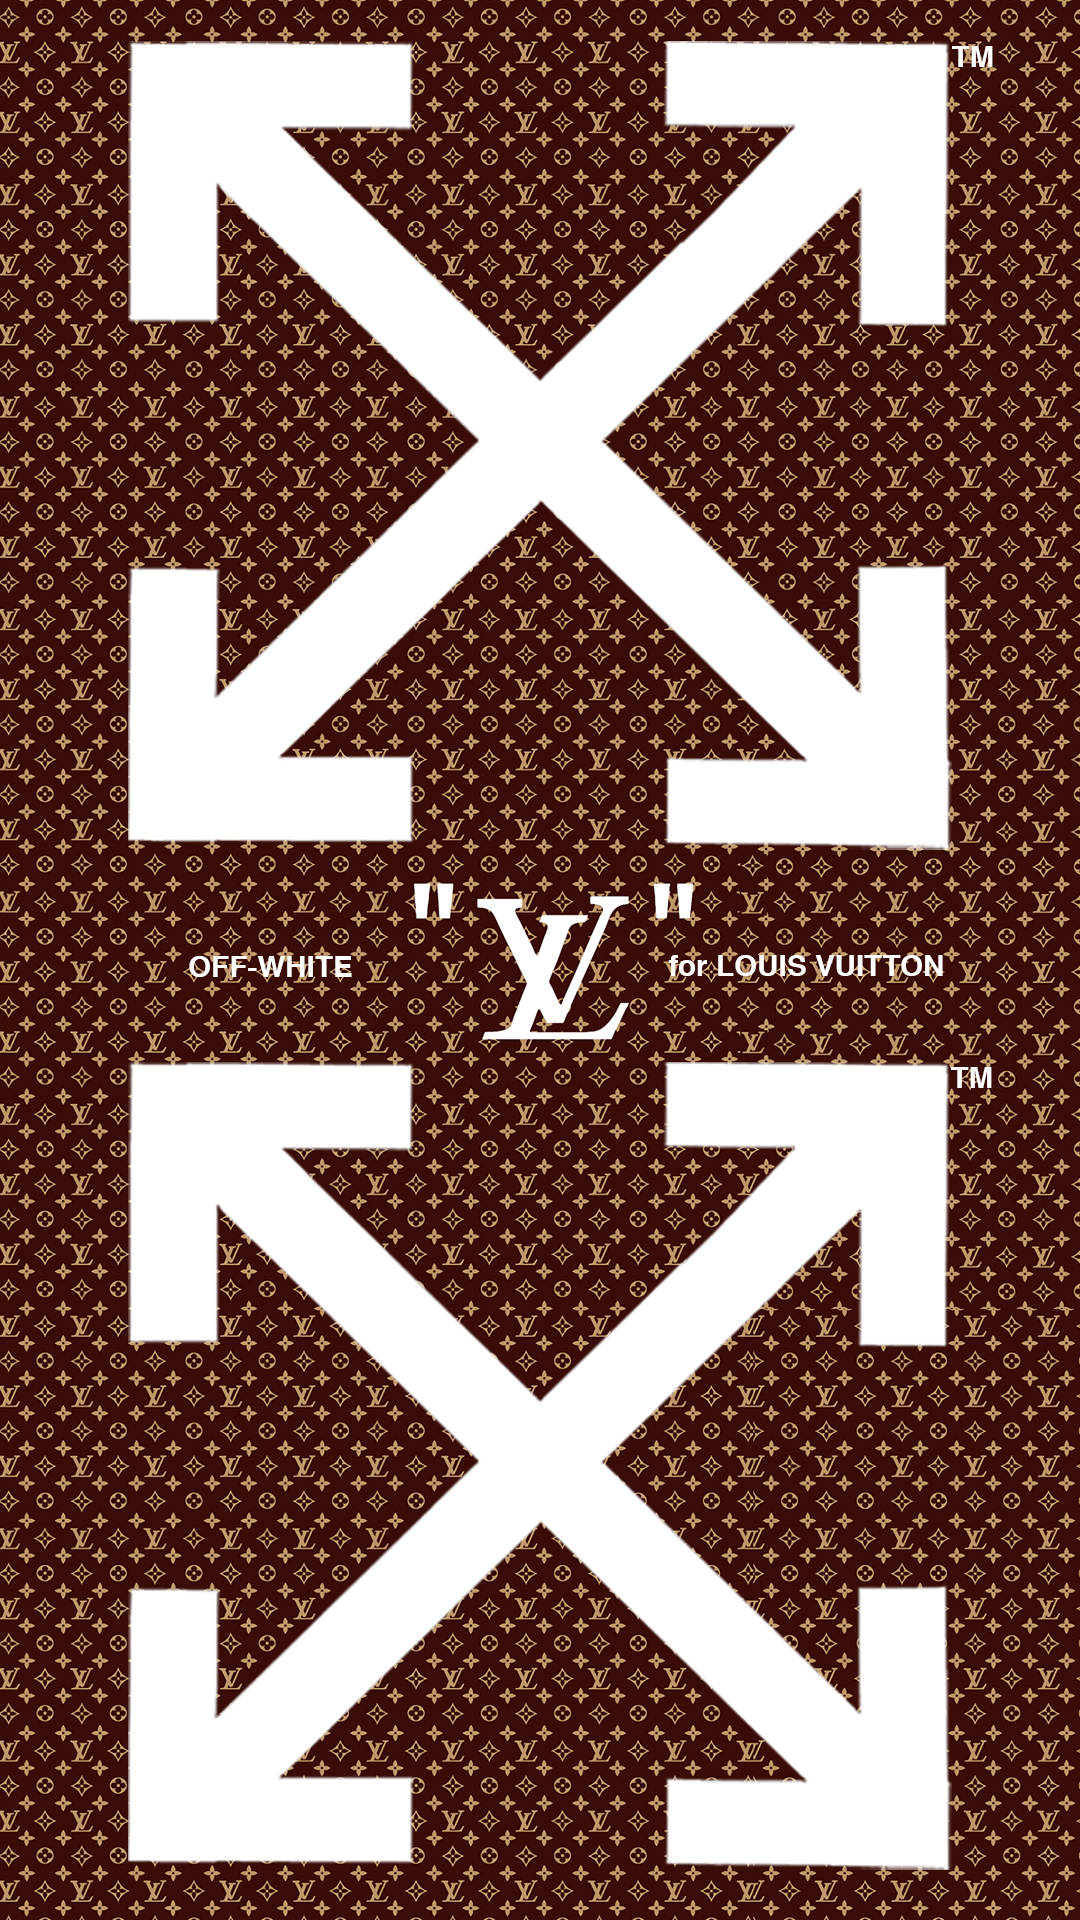 Off-White x Louis Vuitton 💭 - *Mock-Up* 🖊 - #ONUS